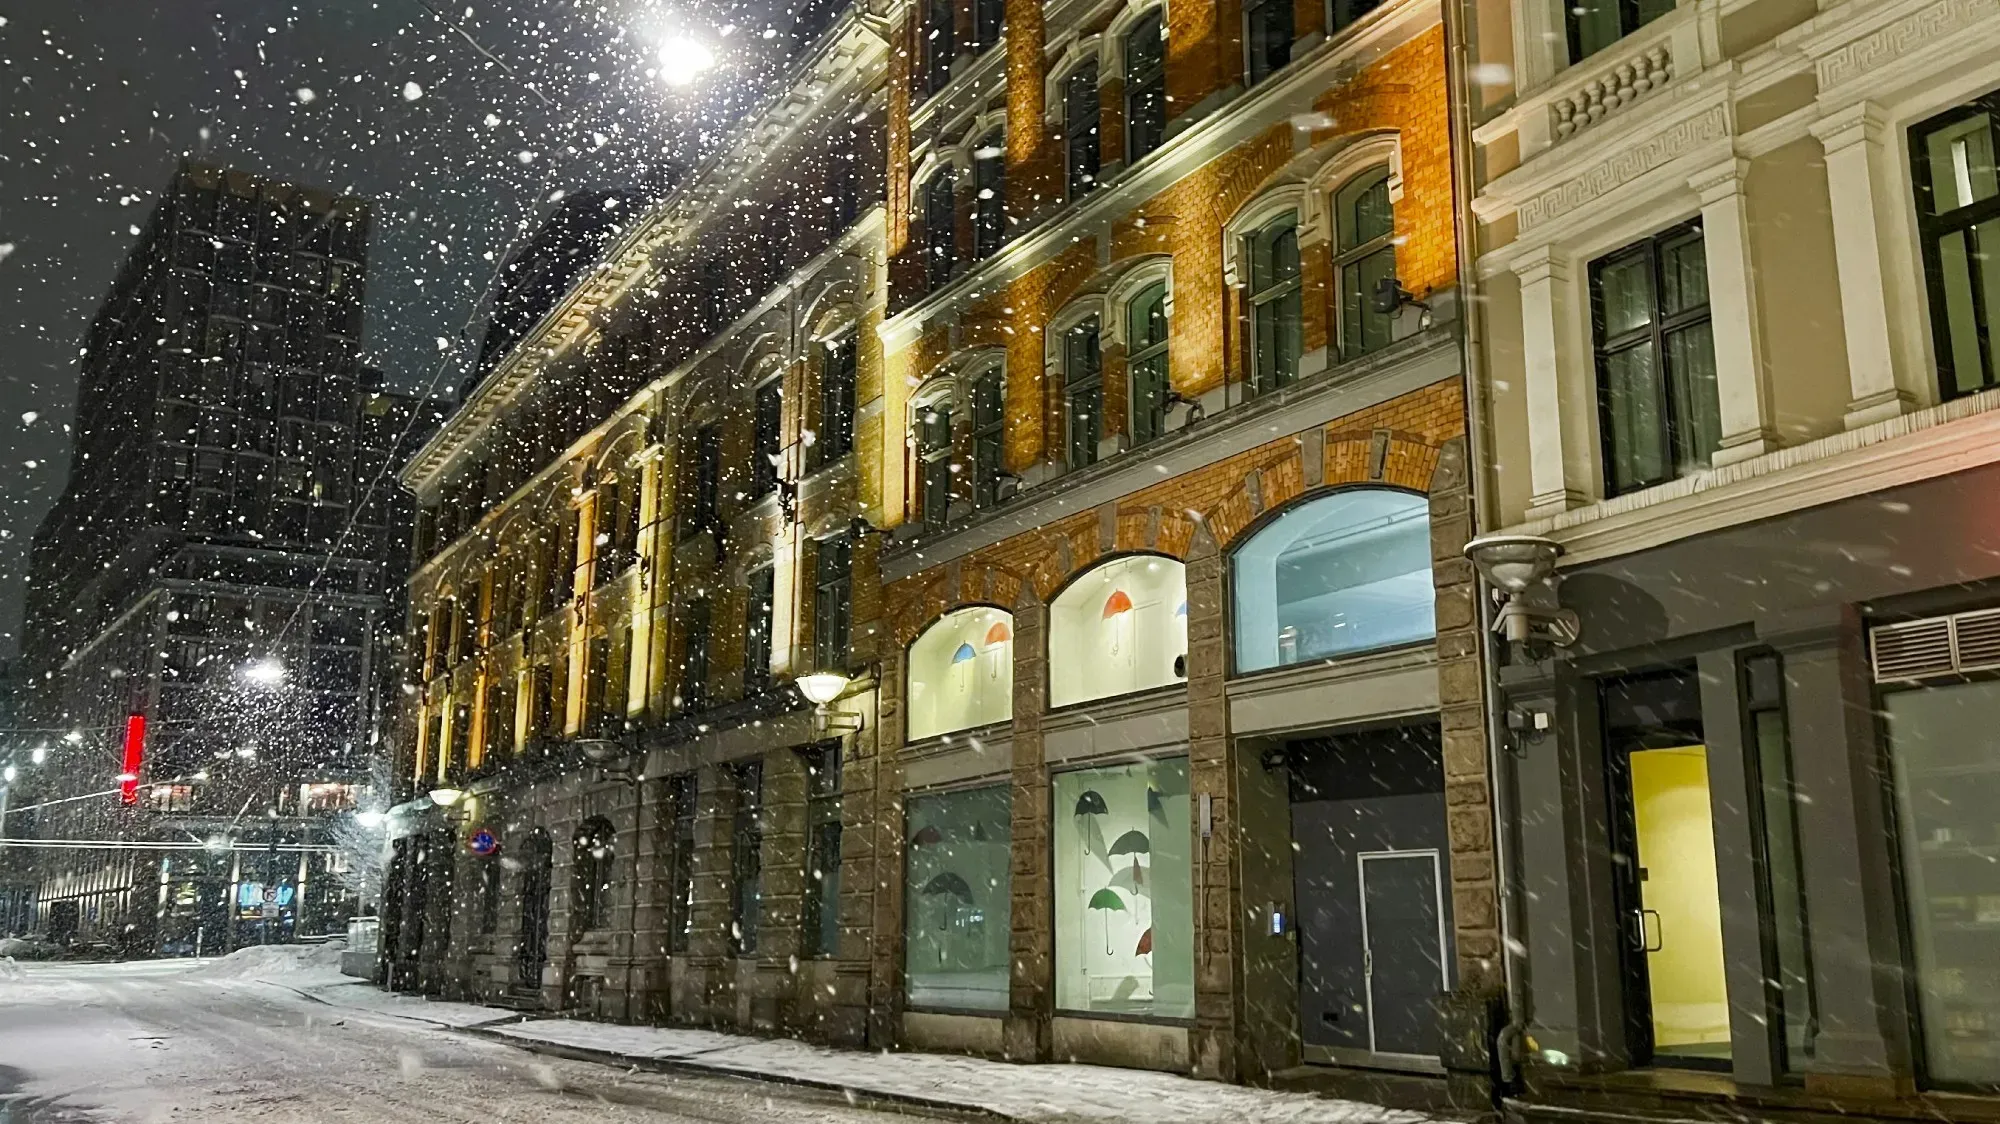 Snow falling at night on an Oslo street